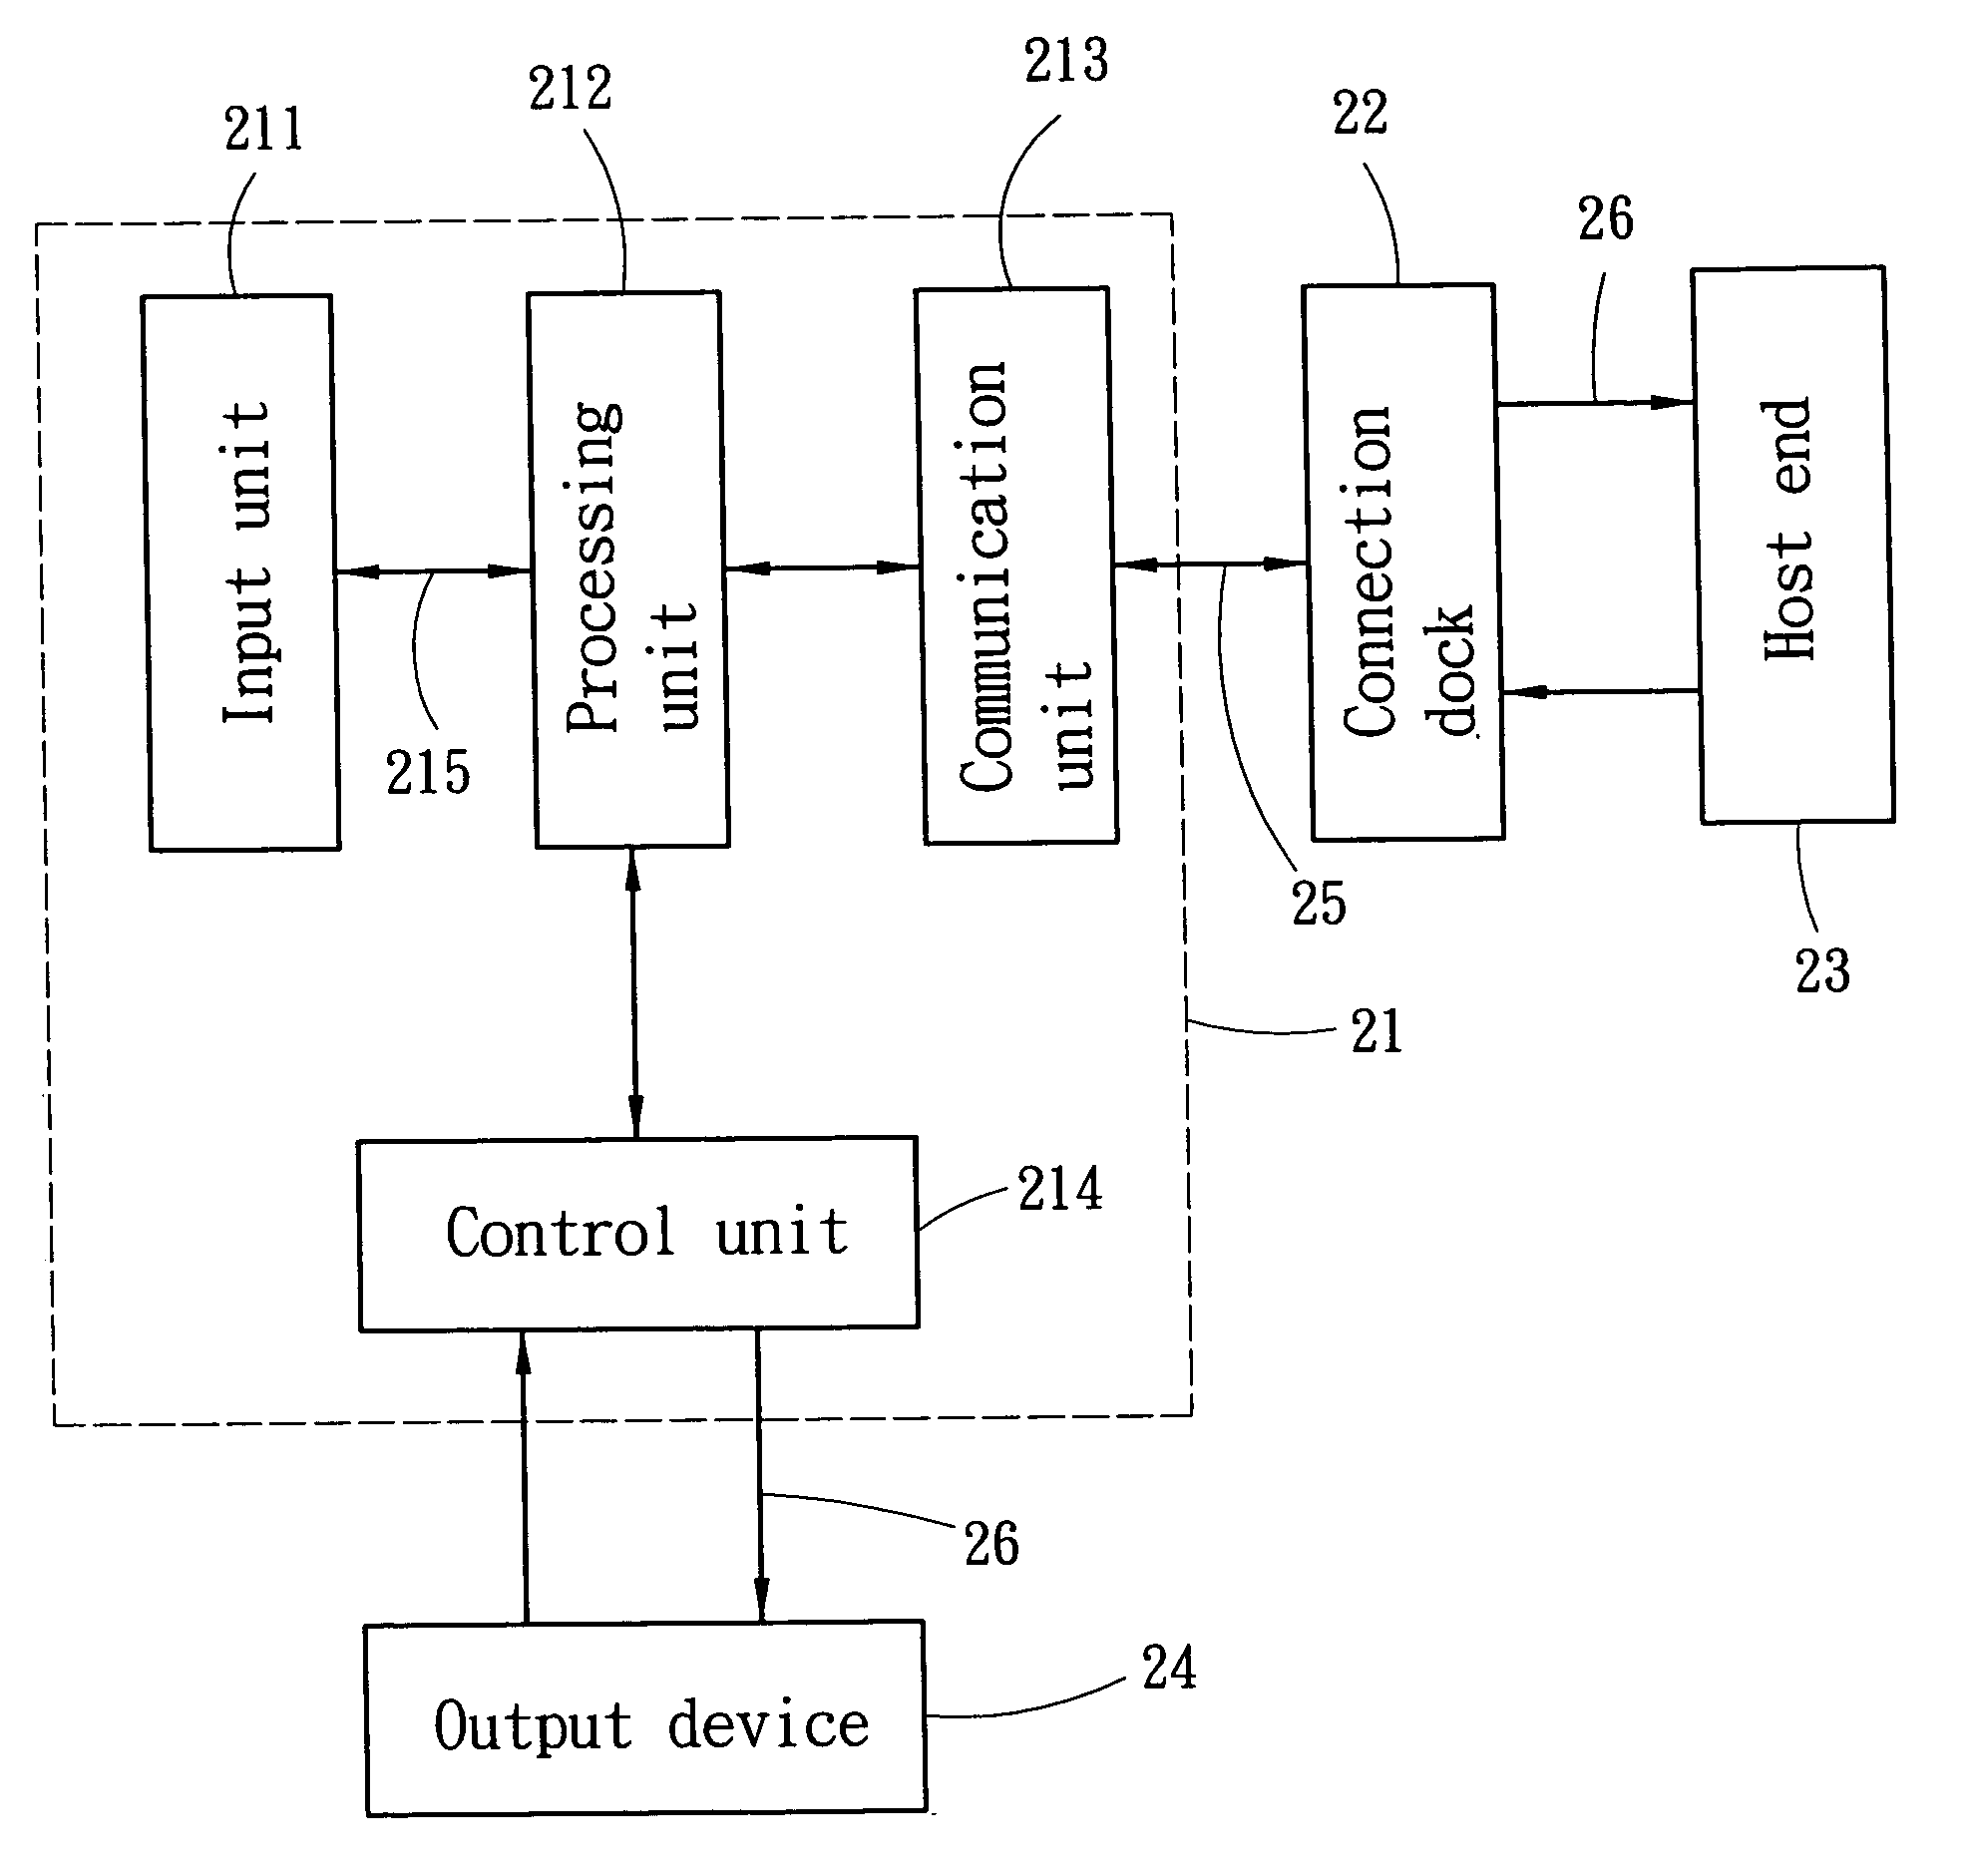 Micro-control apparatus for circular knitting machines